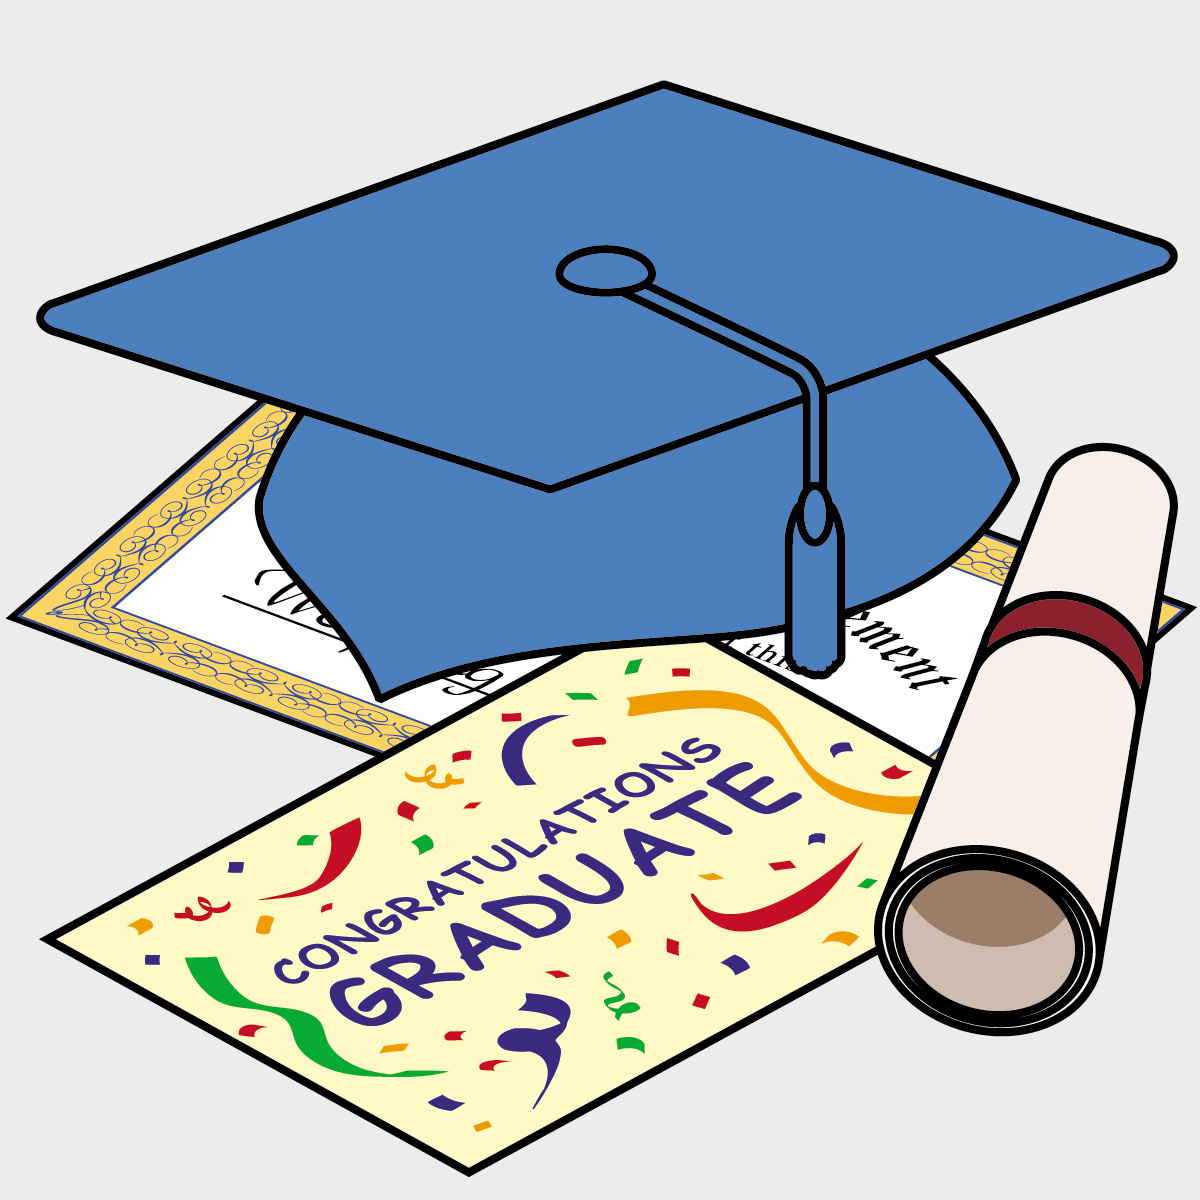 Graduation Cap Gown Clip Art Image Search Results